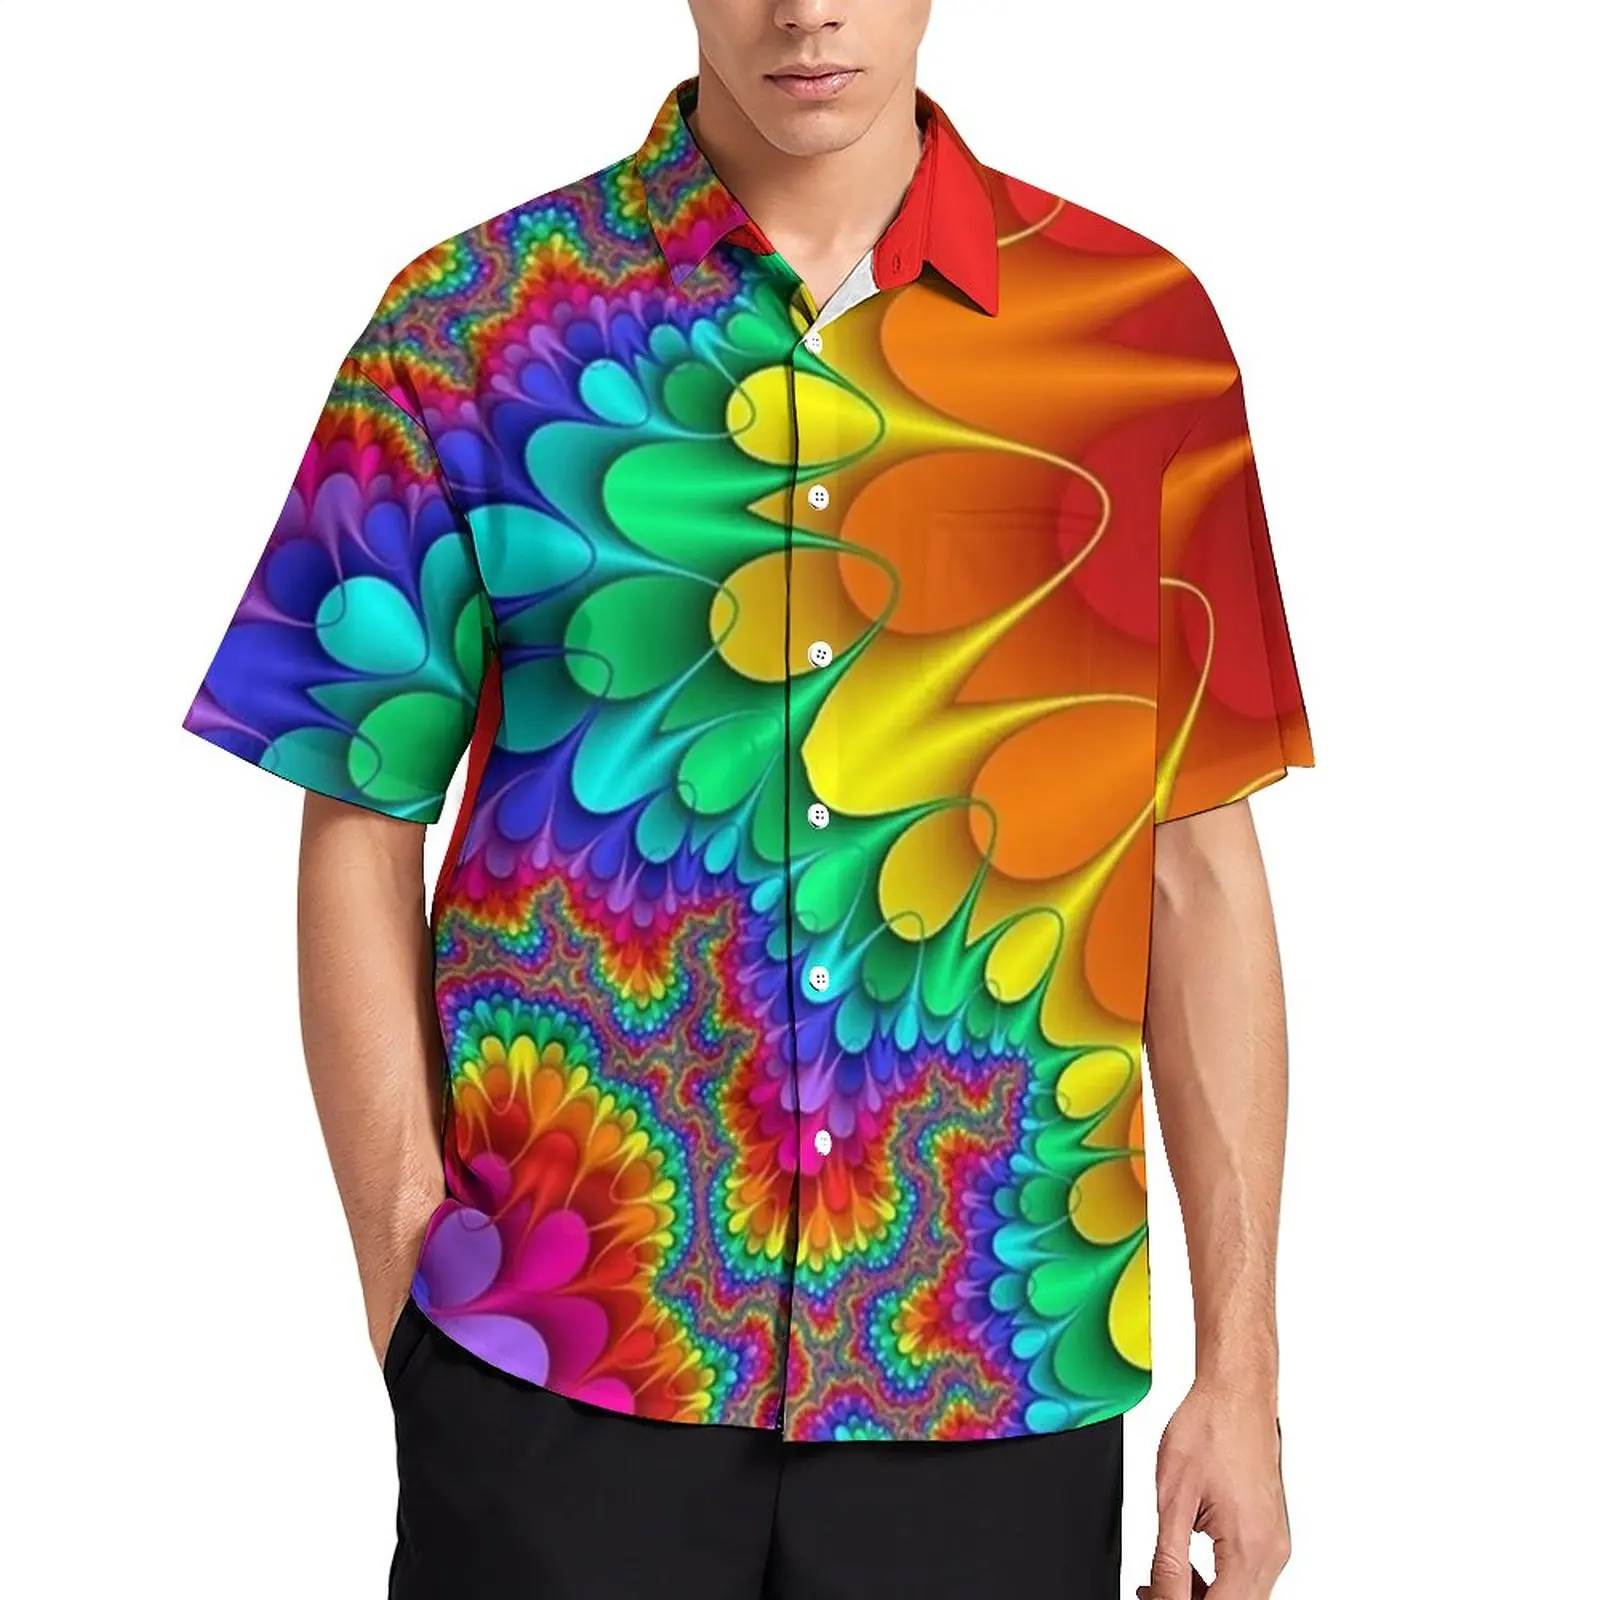 

Rainbow Splash Vacation Shirt Psychedelic Print Summer Casual Shirts Men Cool Blouses Short-Sleeve Design Tops Plus Size 3XL 4XL